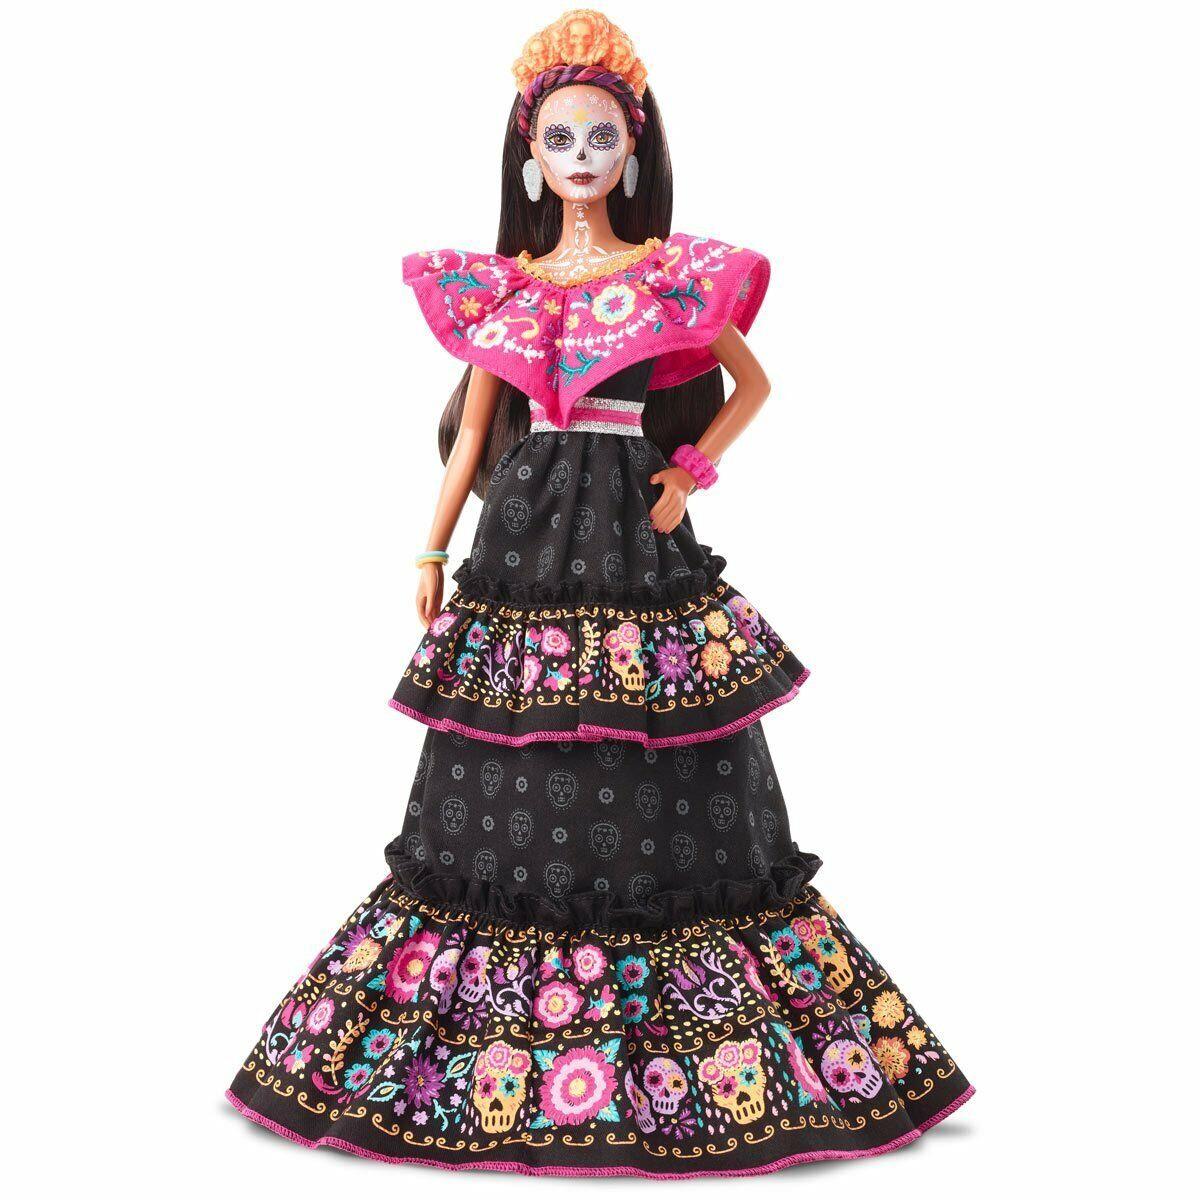 Barbie toy  - Black Doll Hair, Brown Doll Eye